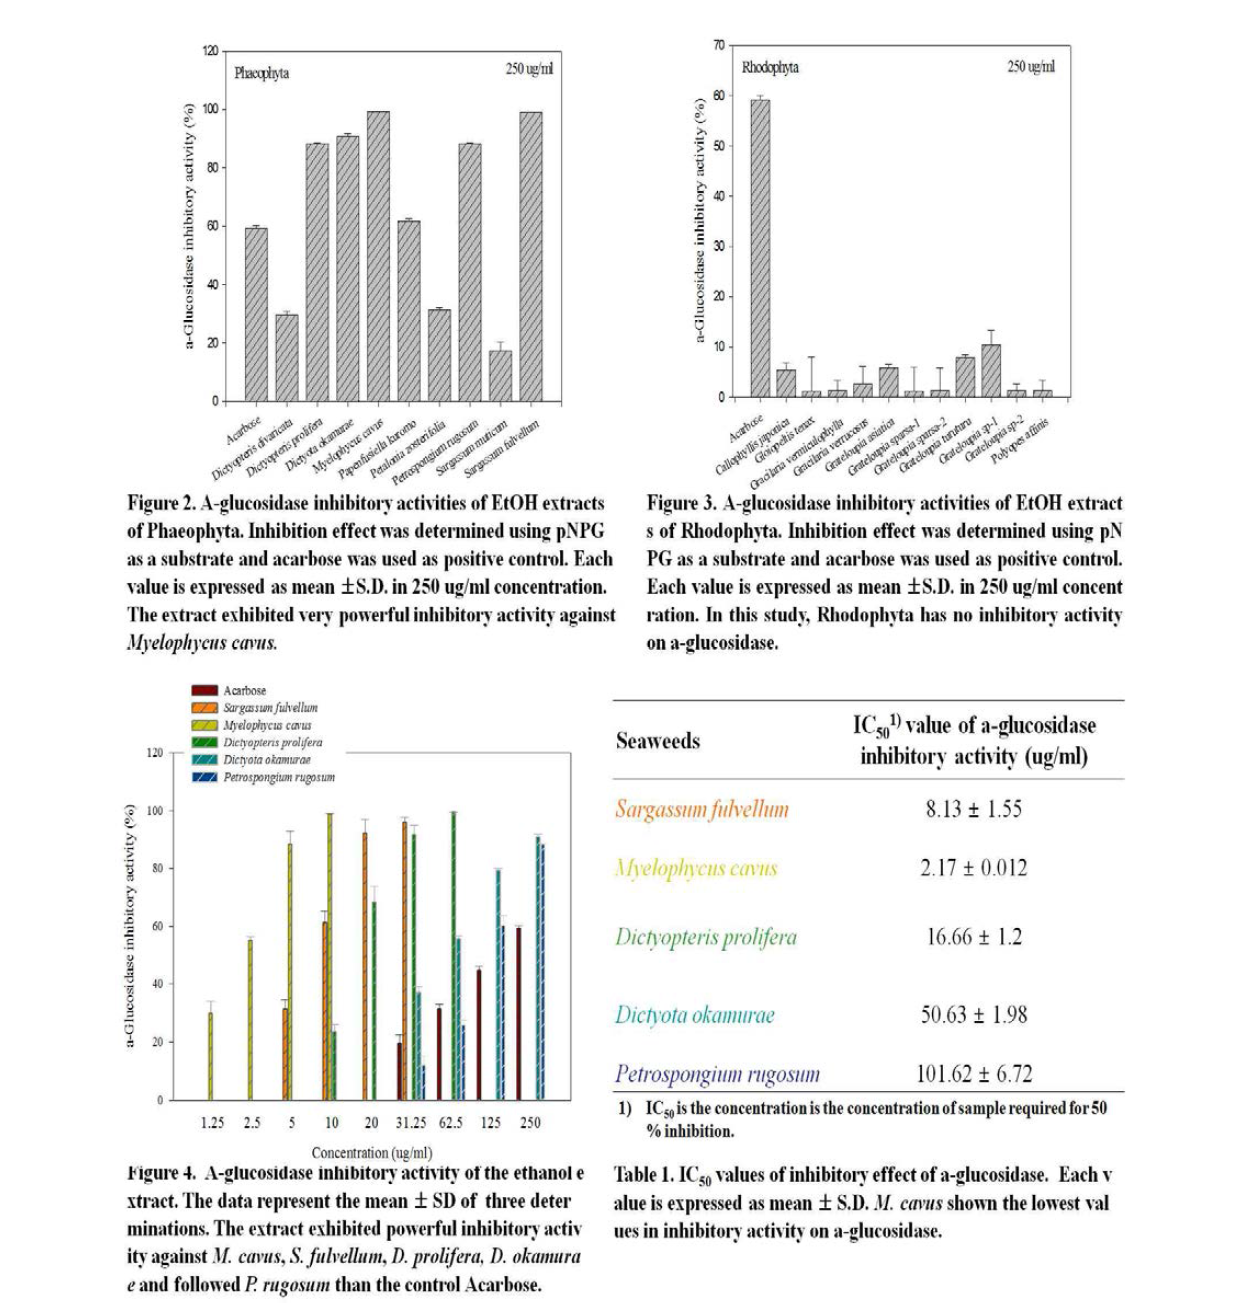 Jeong et al. 2012. Investigation of α-Glucosidase Inhibitory Activity of Ethanolic Extracts from 19 Species of Marine Macroalgae in Korea